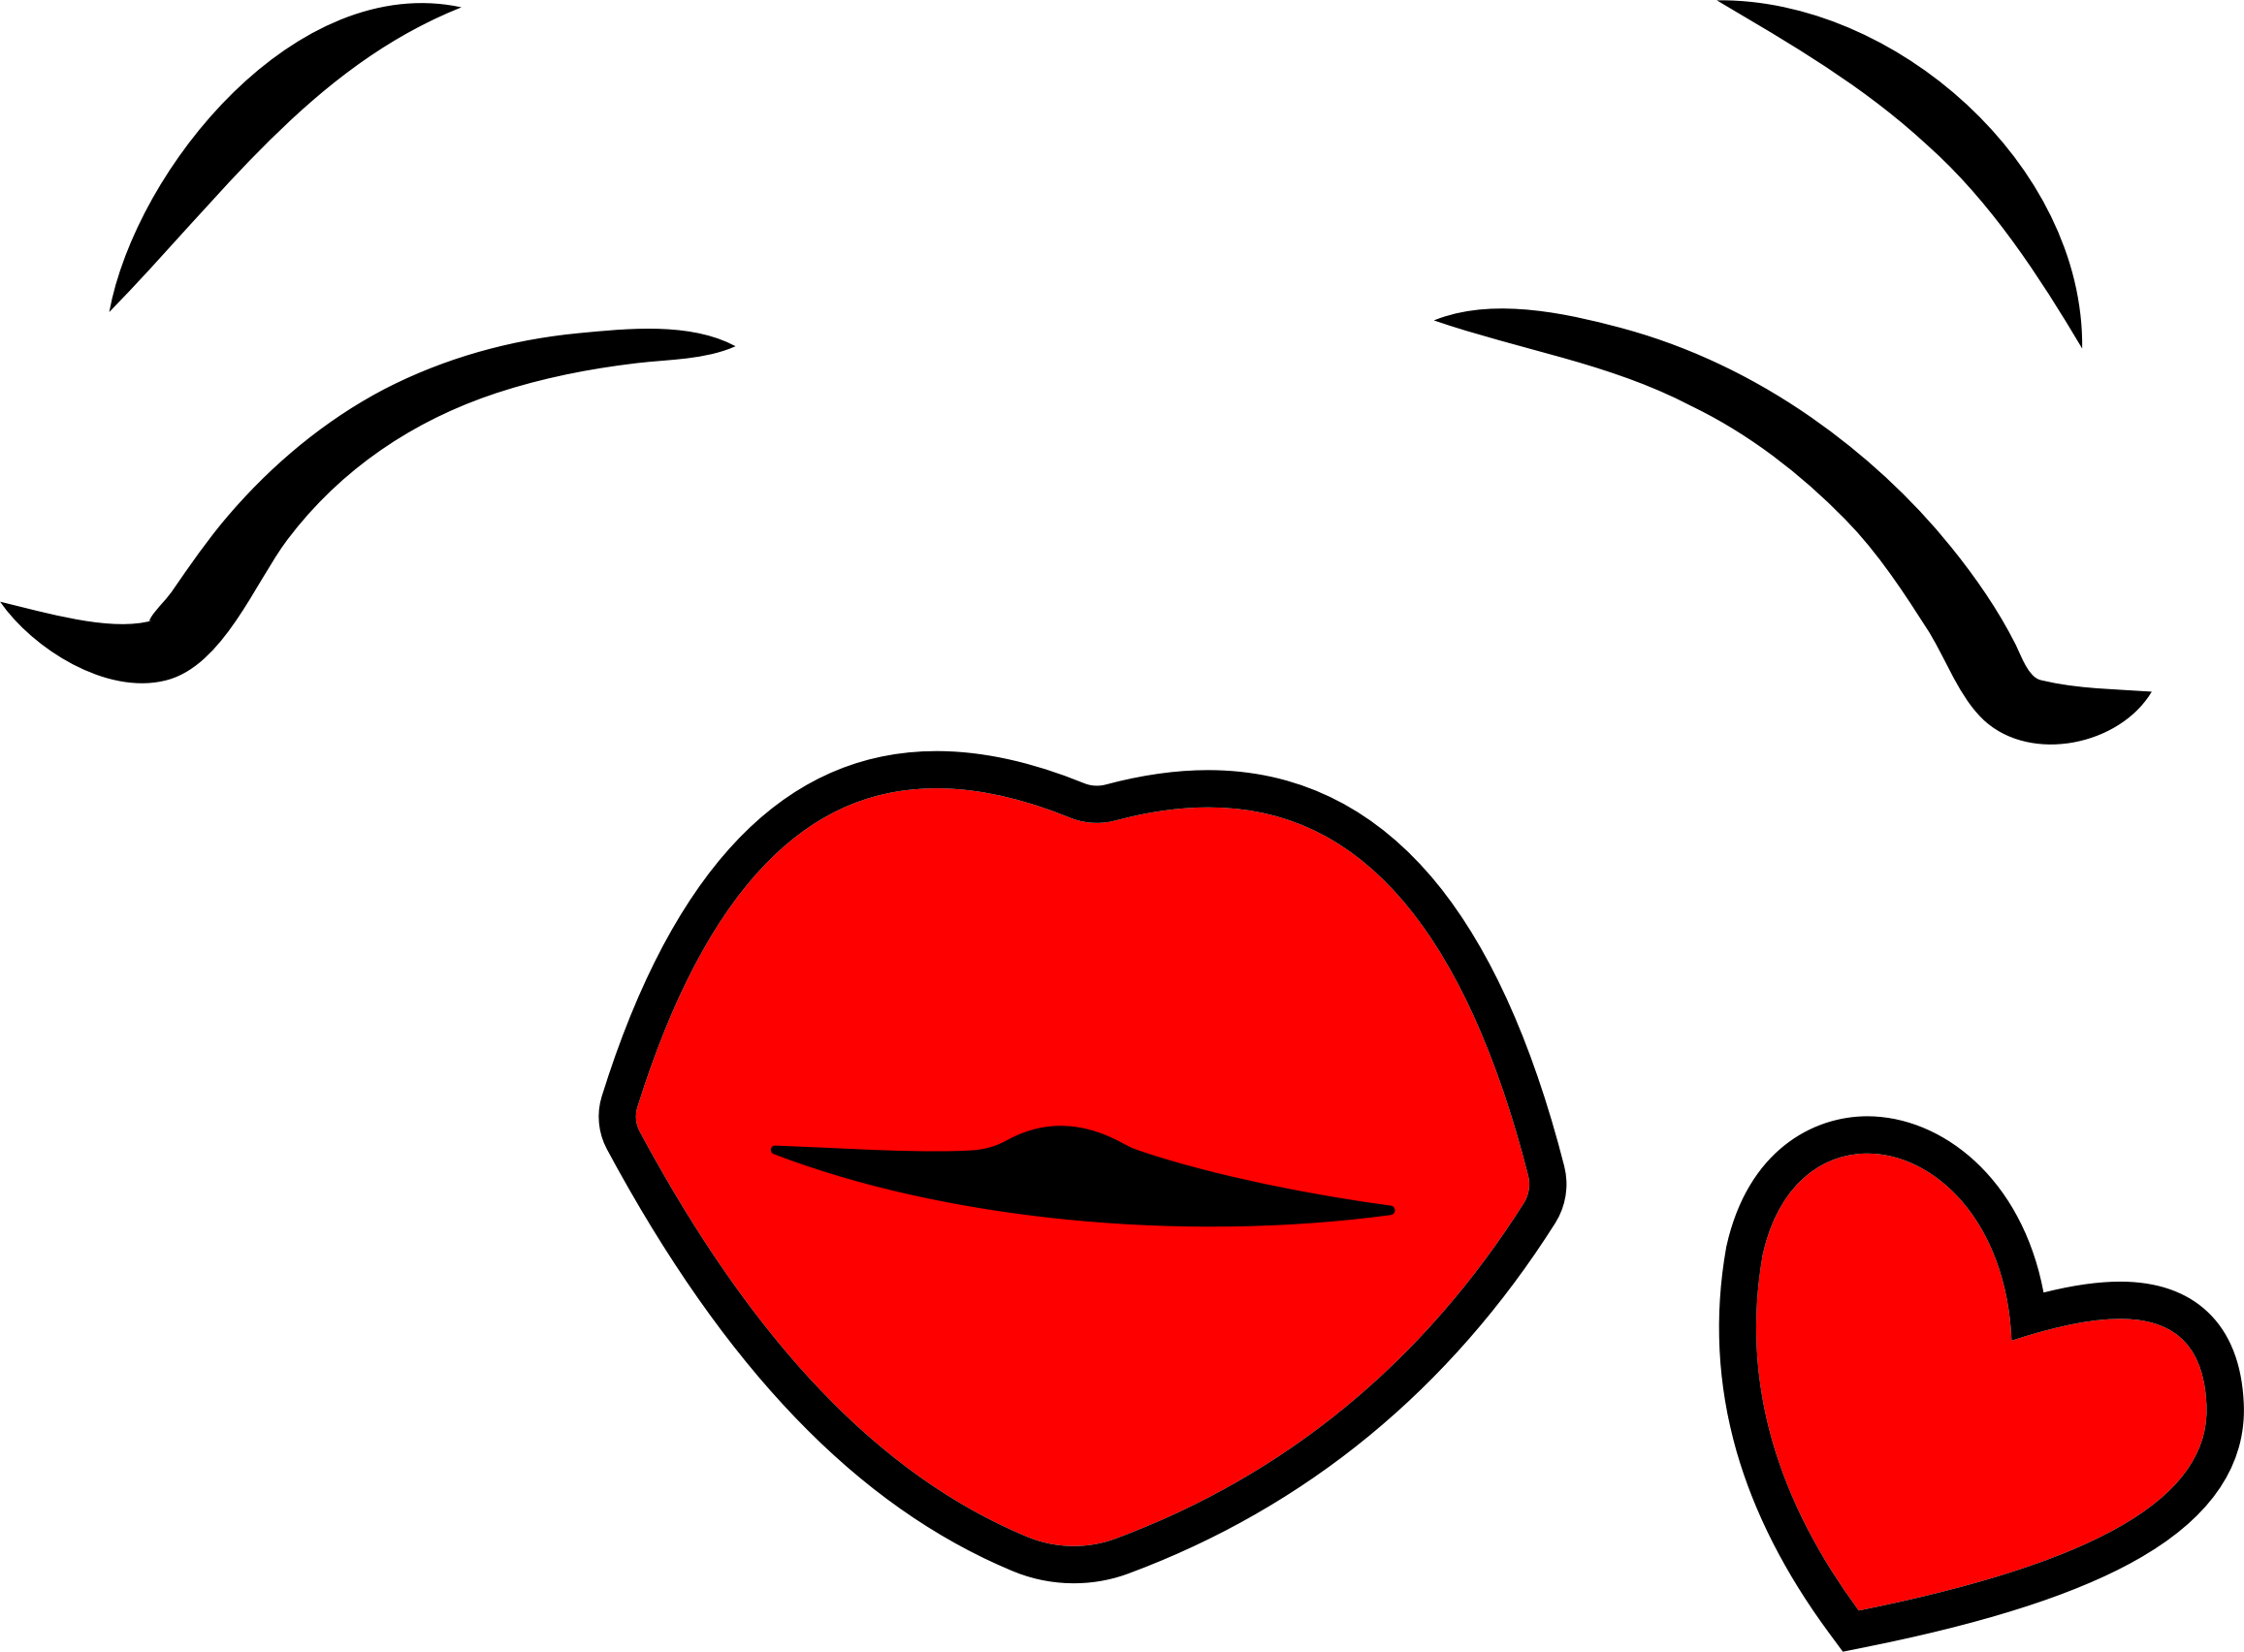 kiss clipart heart shaped lip